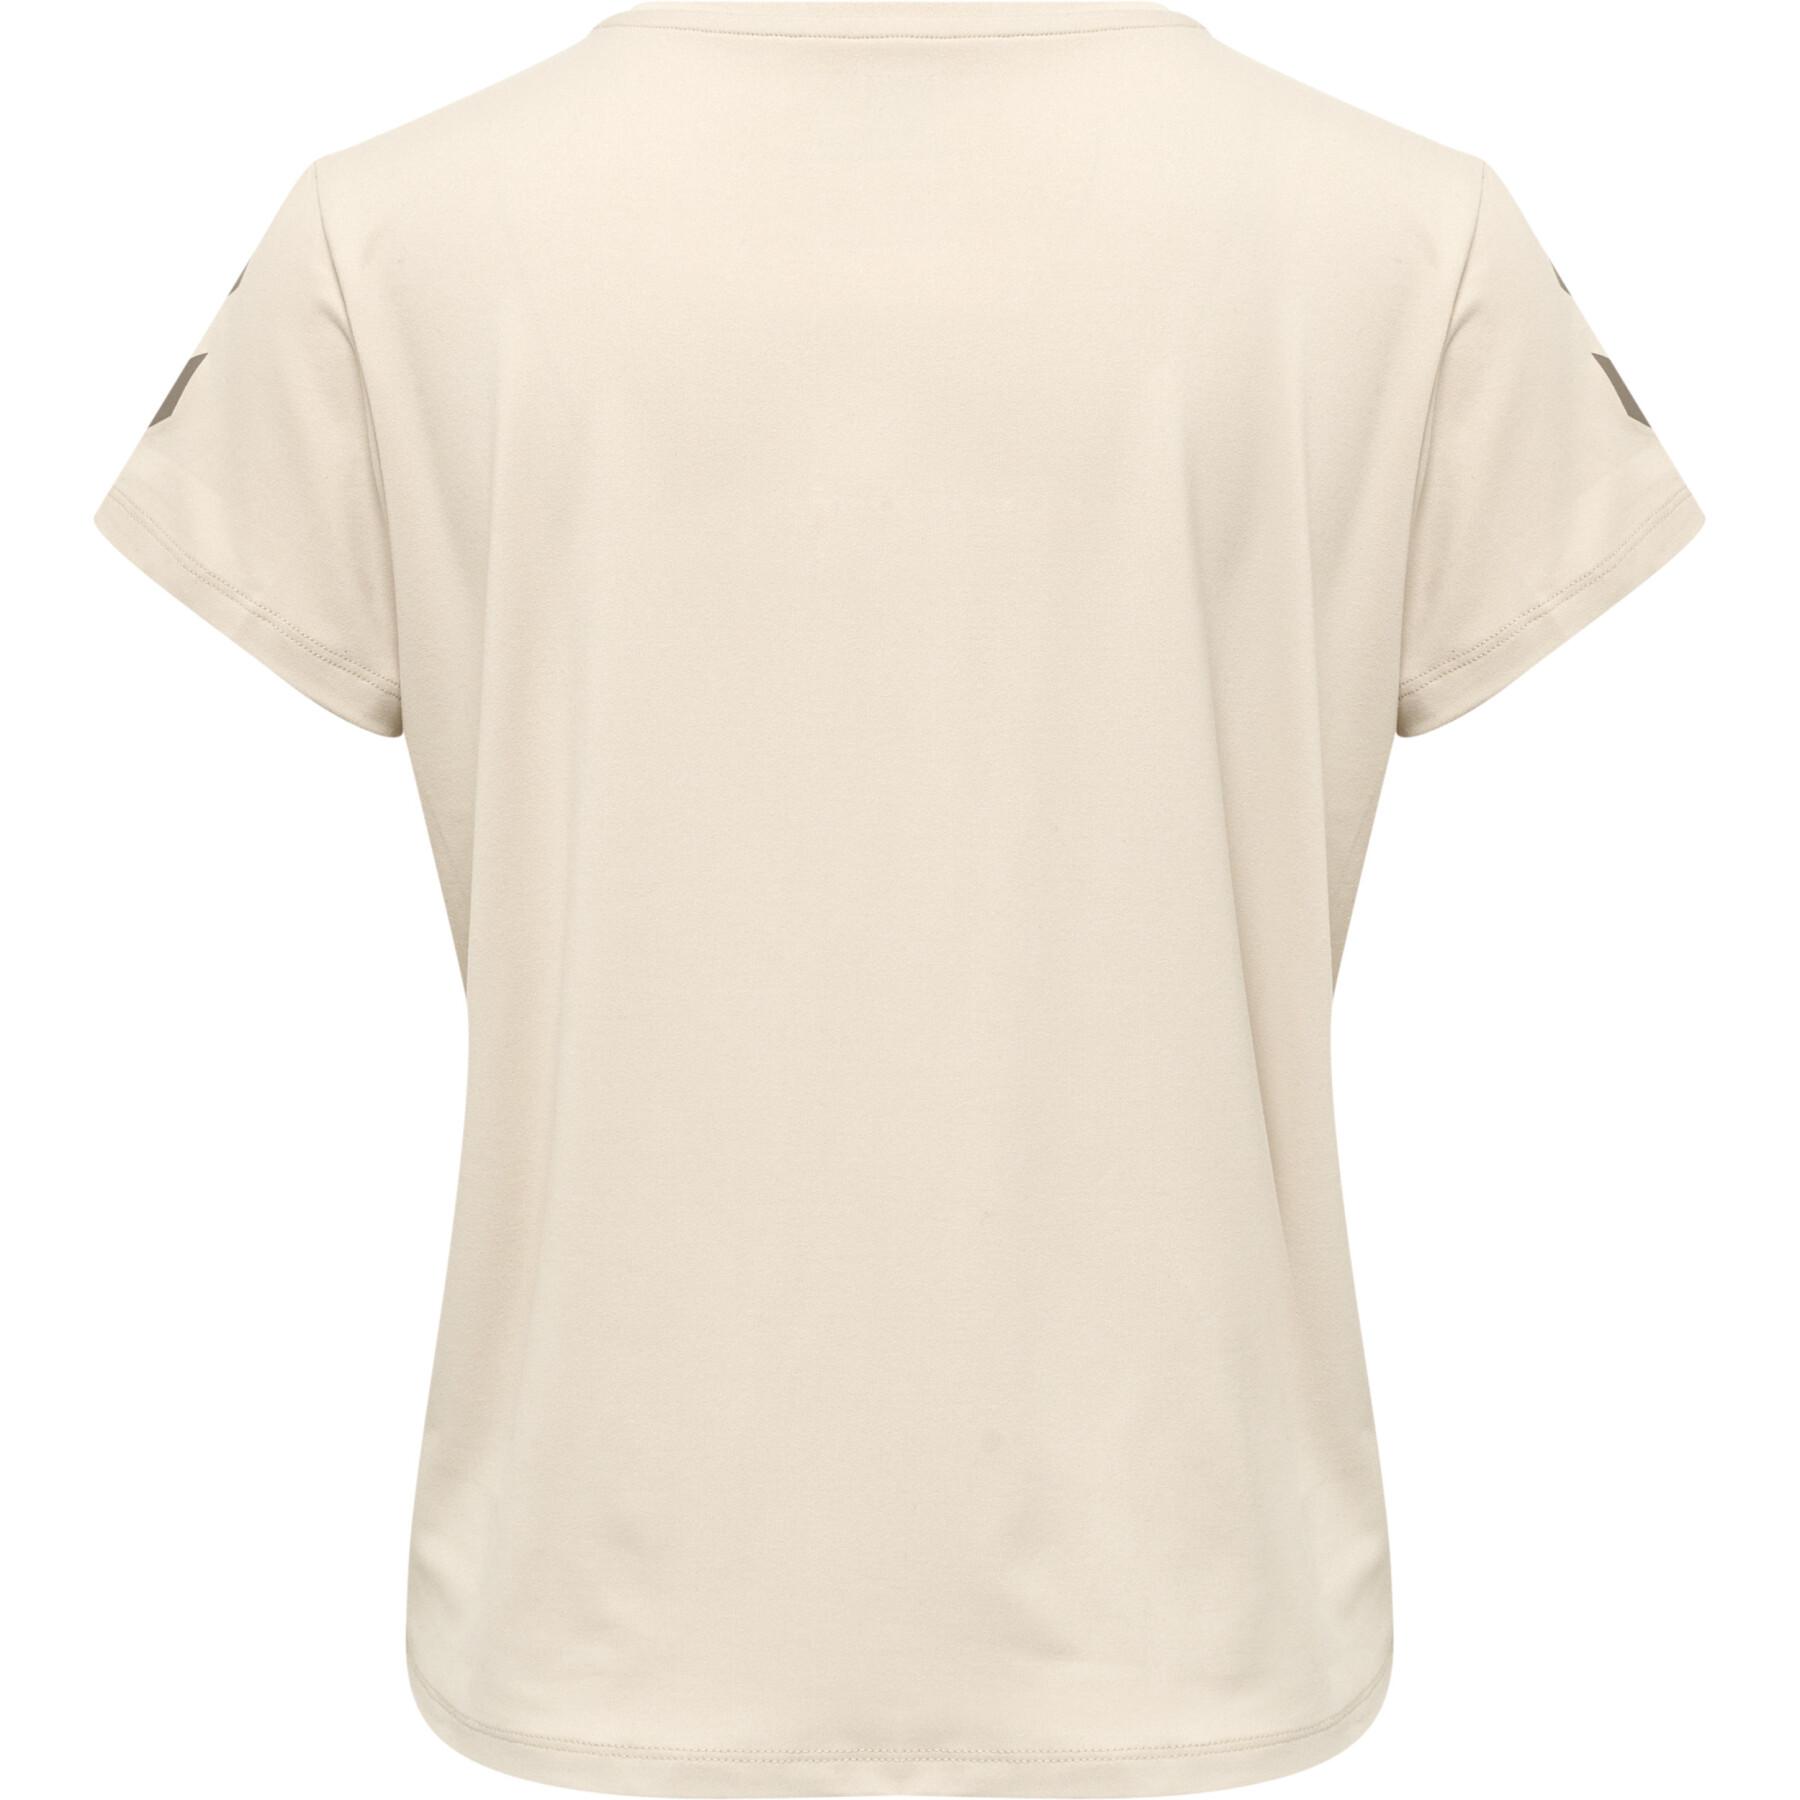 Women\'s T-shirt Hummel MT Taylor - Hummel - Sportswear T-Shirts - T-Shirts